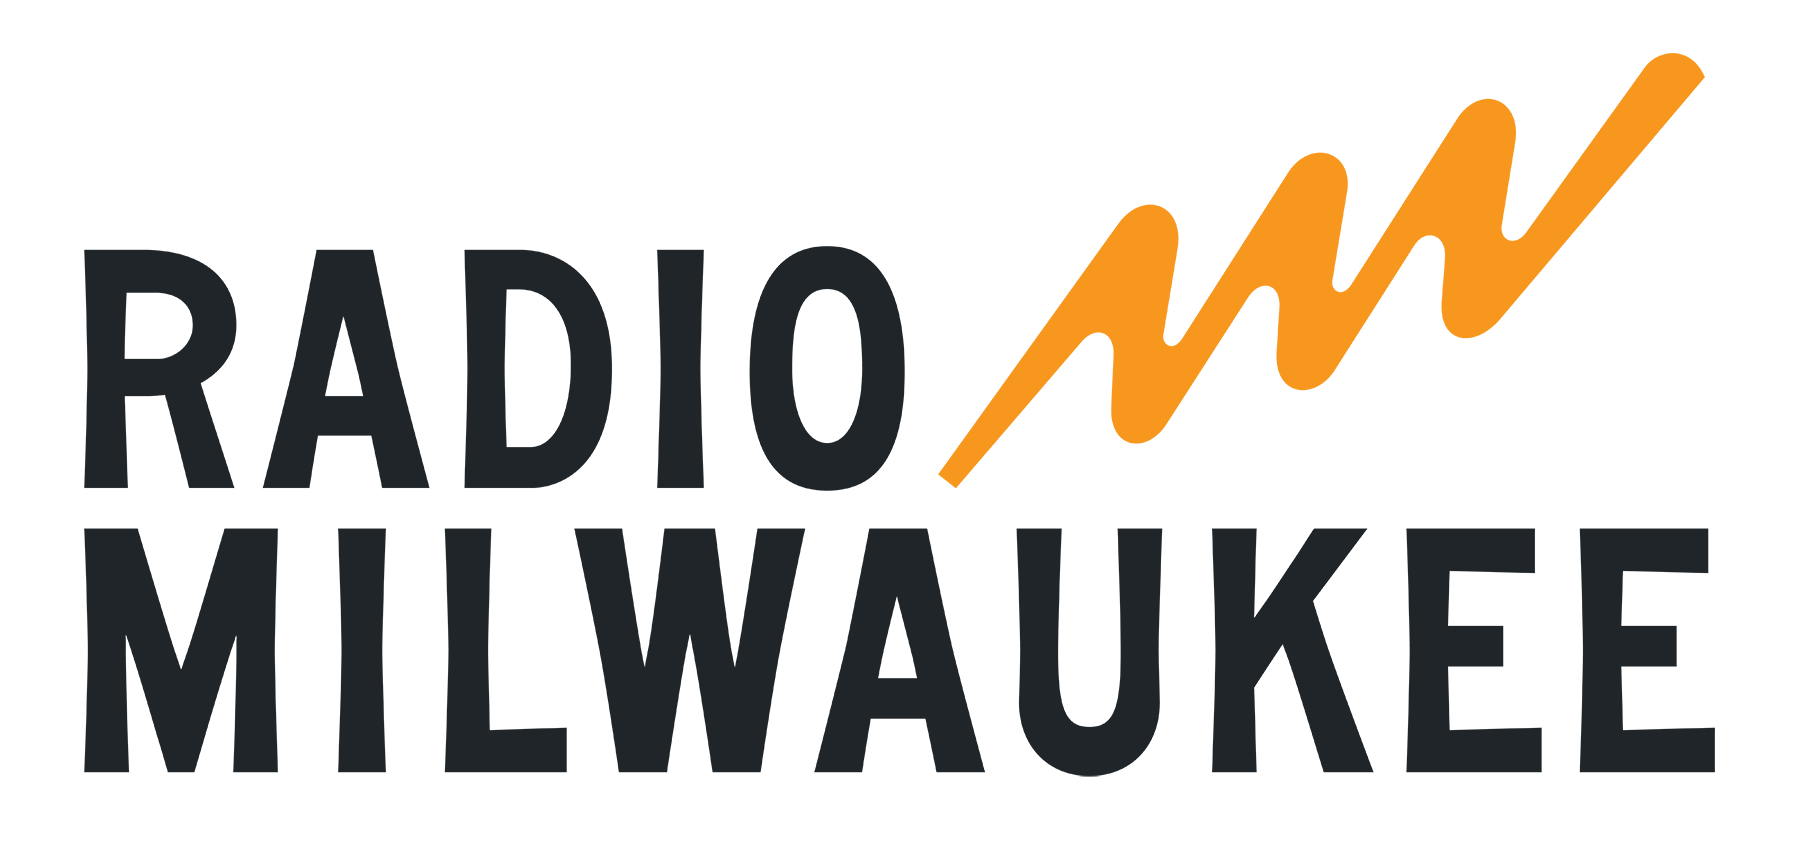 Radio Milwaukee logo